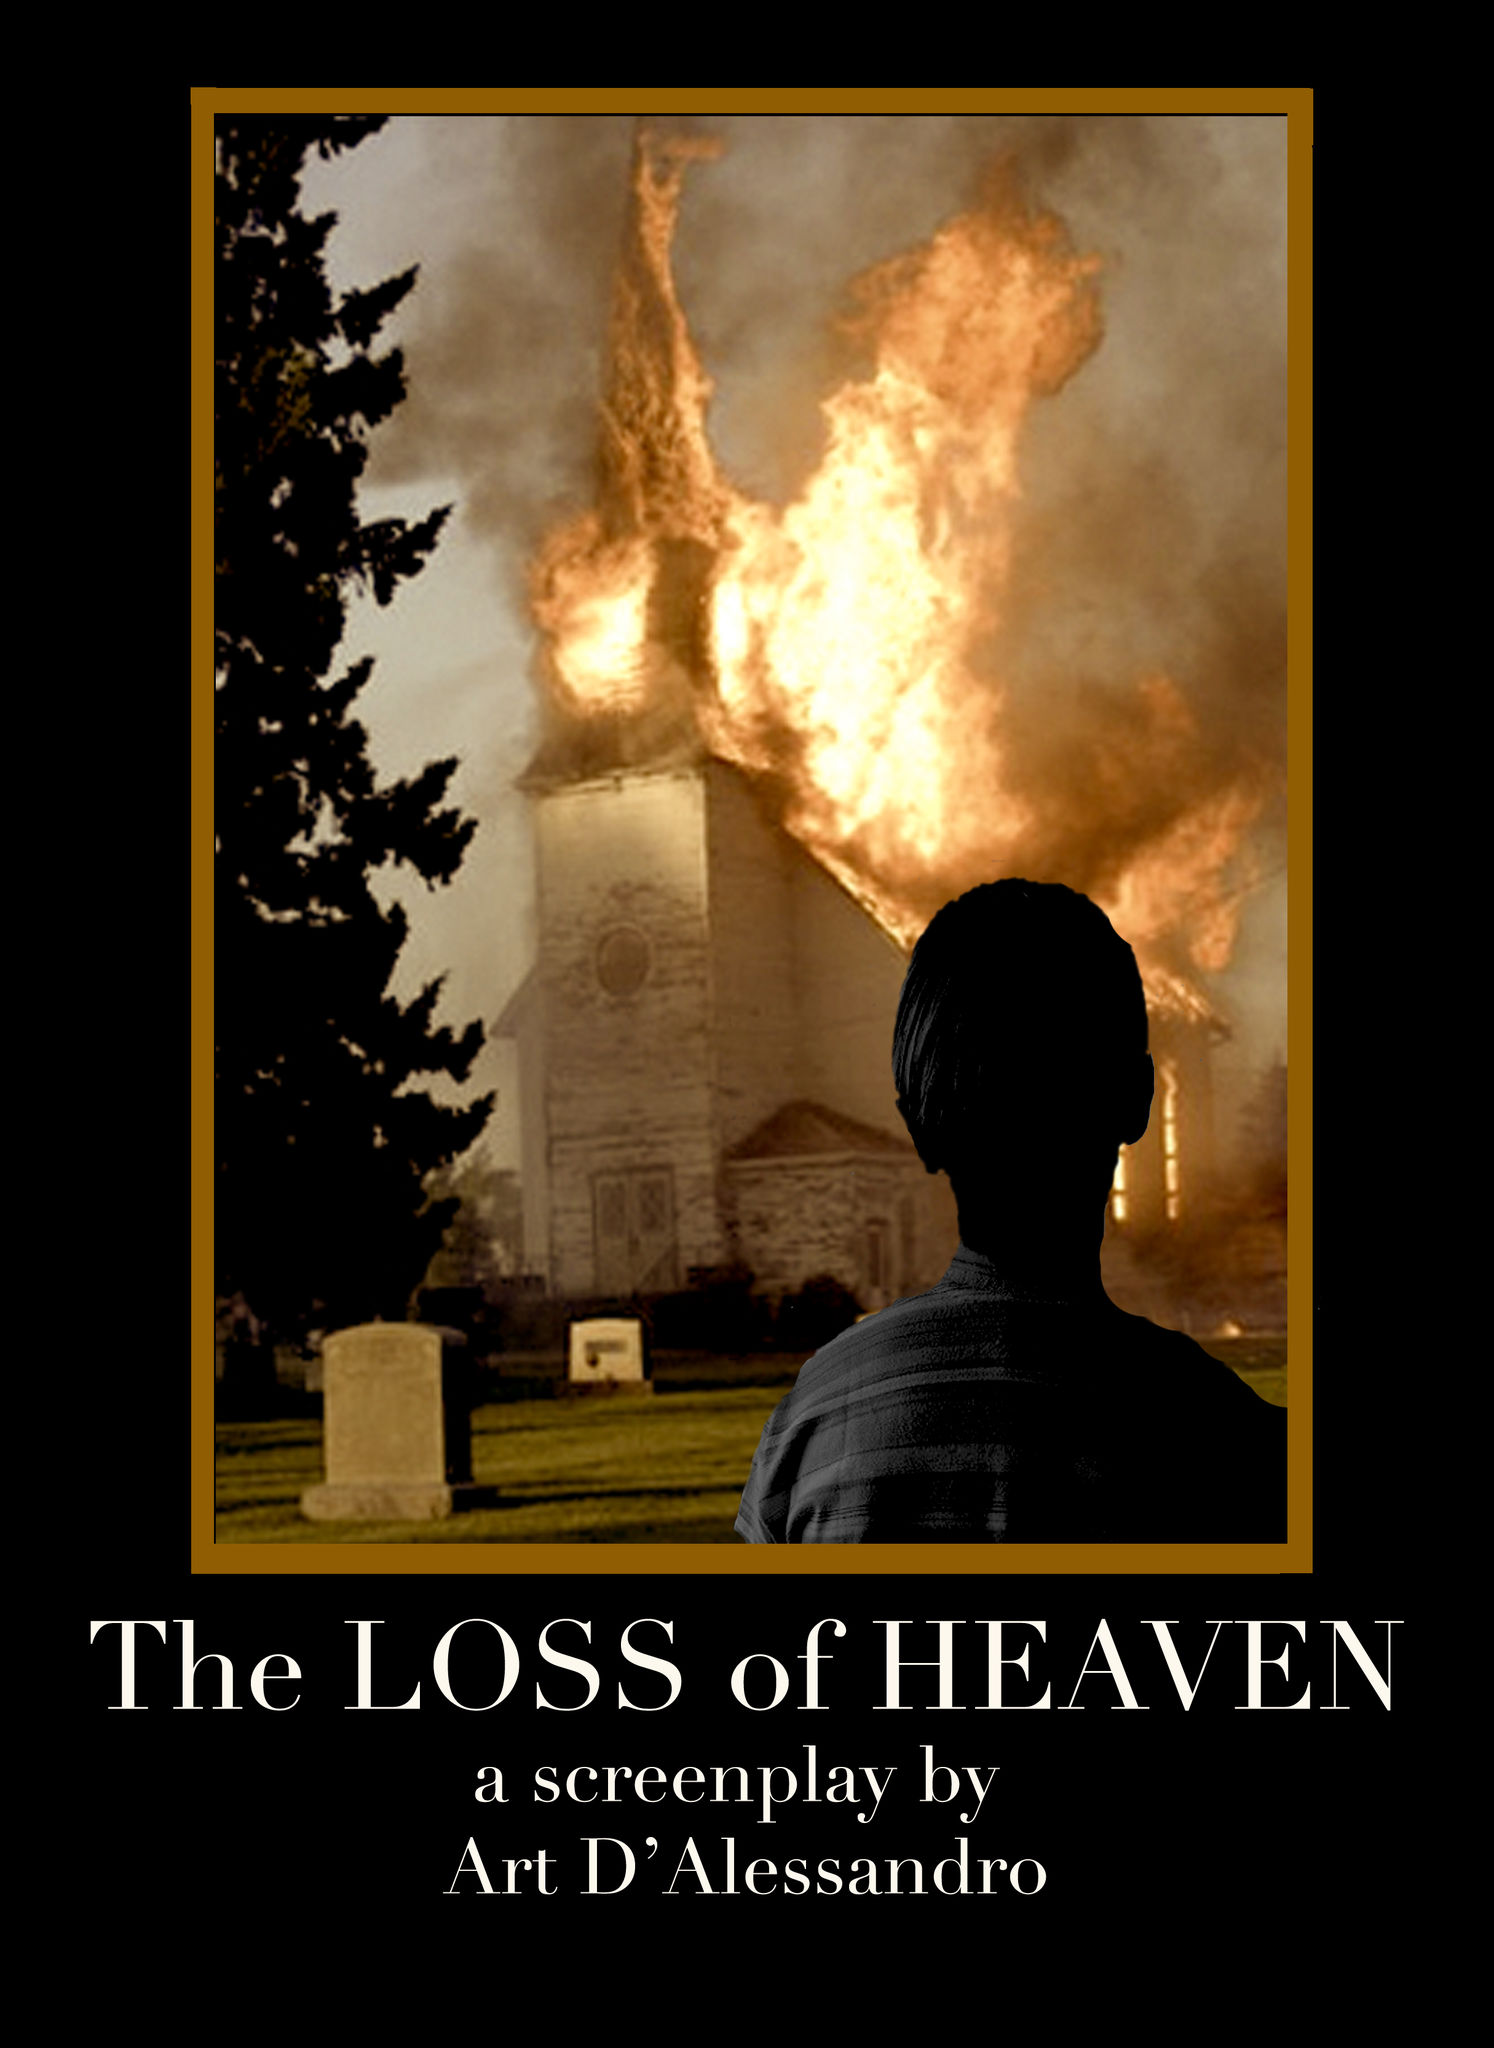  THE LOSS OF HEAVEN